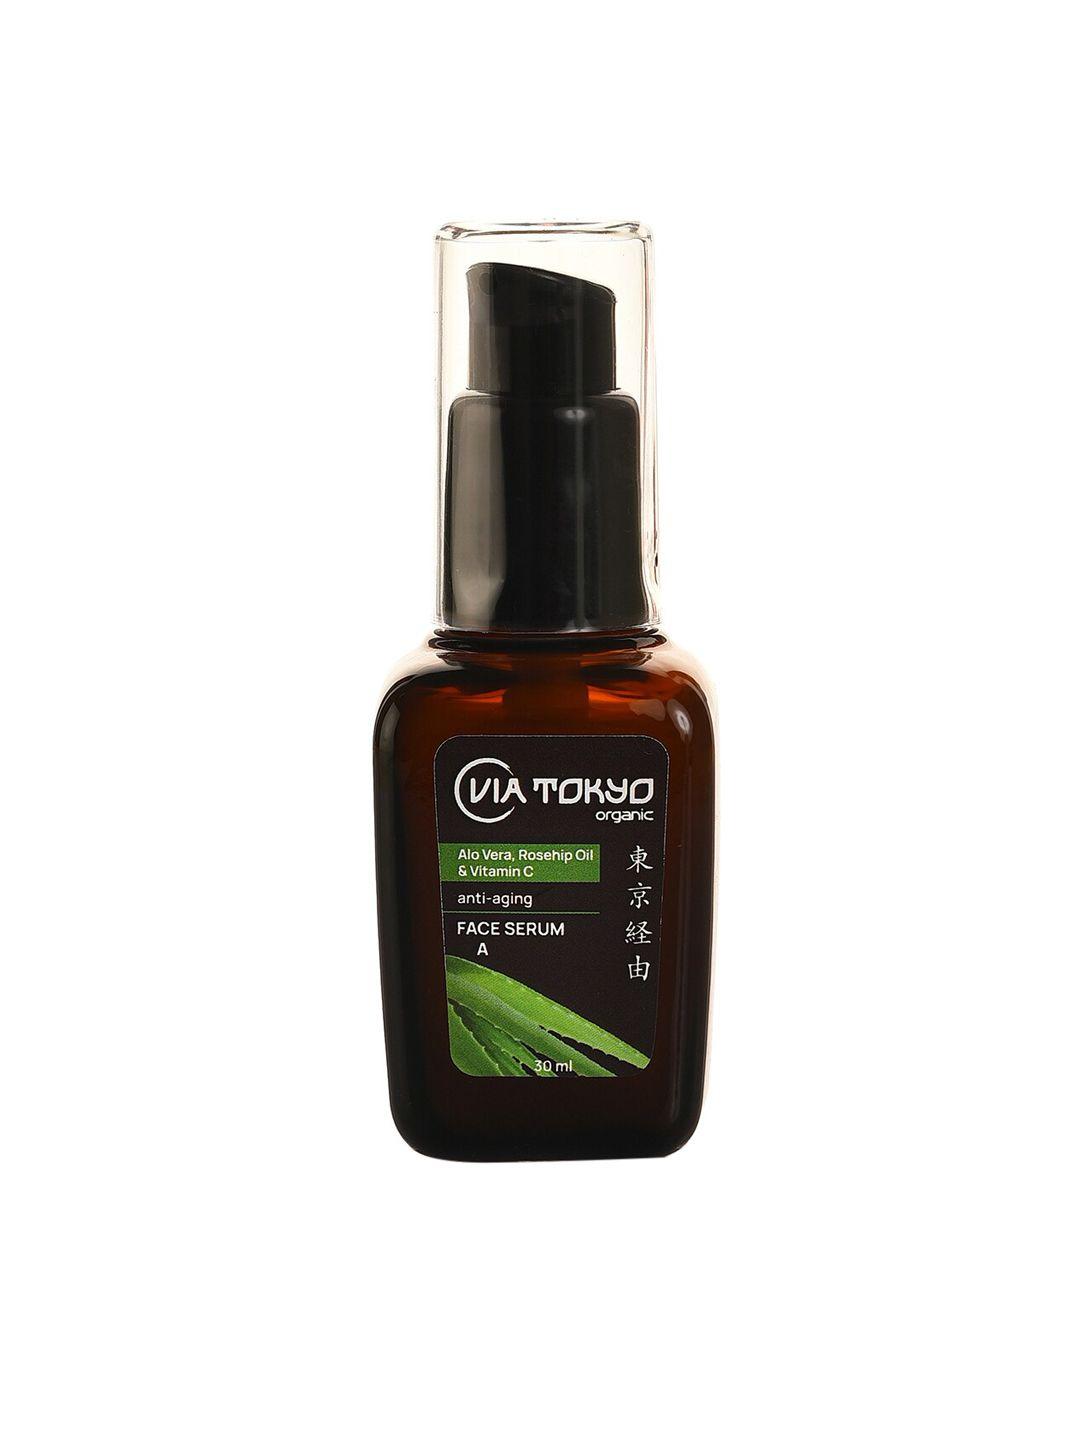 via tokyo organic alo vera, rosehip oil & vitamin c anti-aging face serum 30 ml